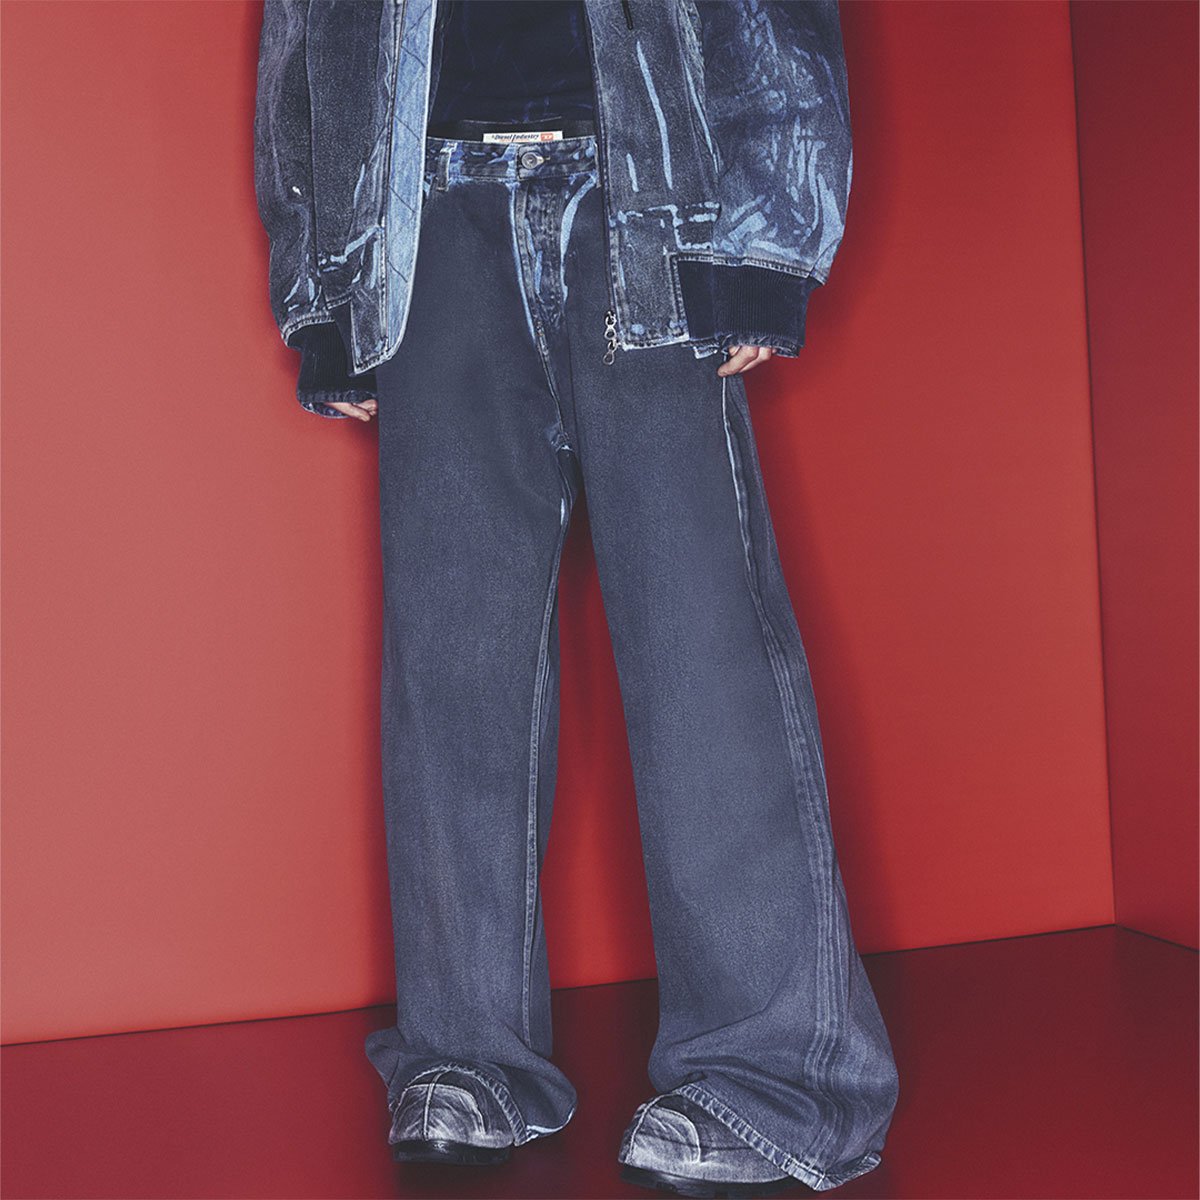 Diesel: New arrivals, Jeans, Jackets, Shoes & Bags | Diesel®